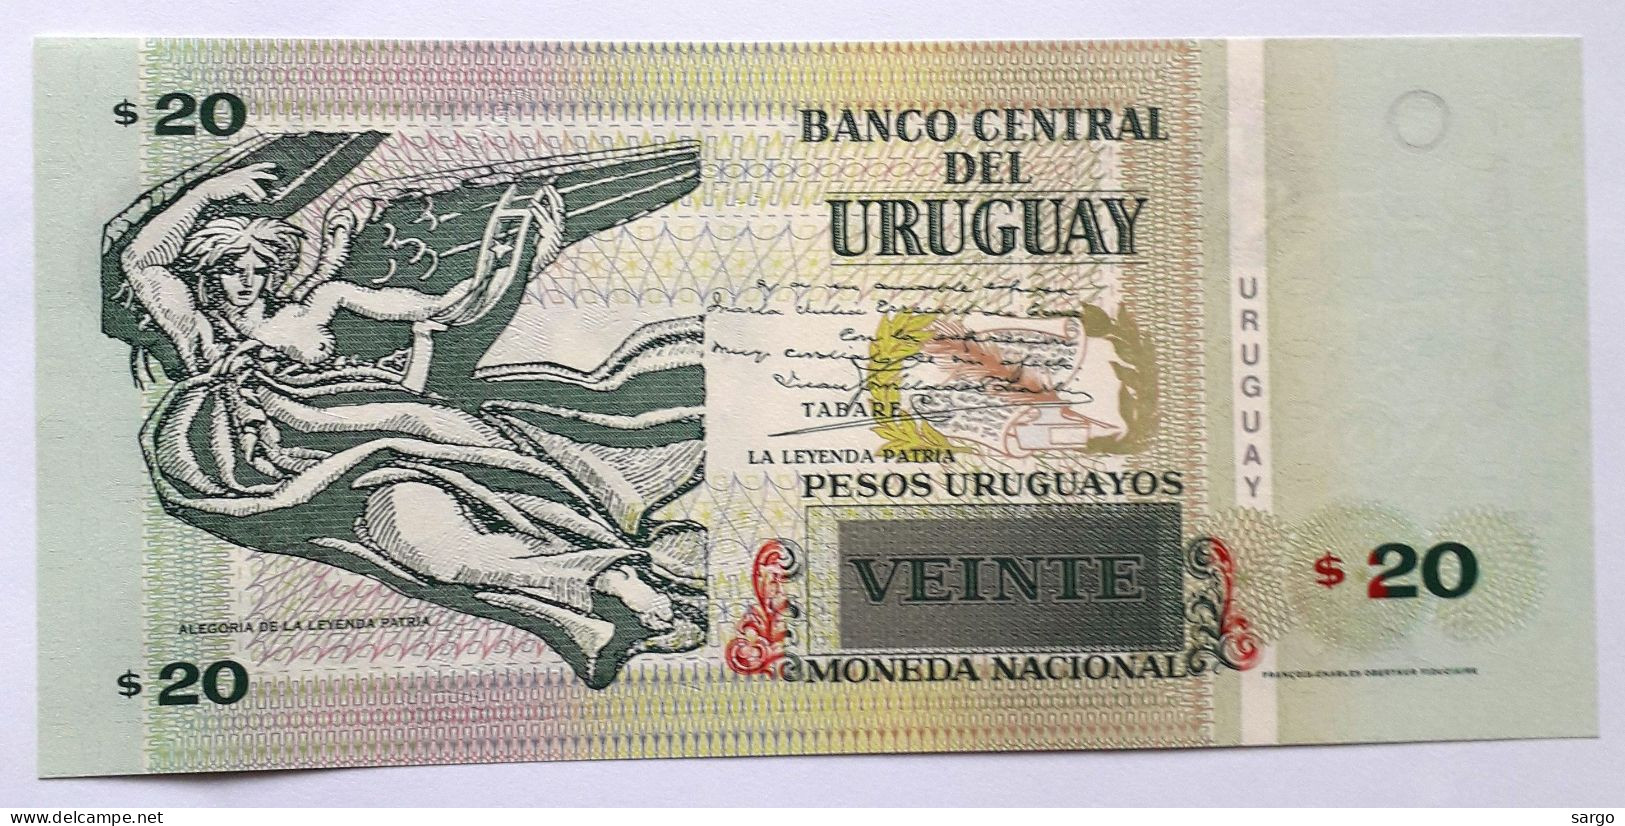 URUGUAY - 20 PESOS URUGUAYOS - P 86 A (2008)  - UNC - BANKNOTES - PAPER MONEY - CARTAMONETA - - Turkmenistán